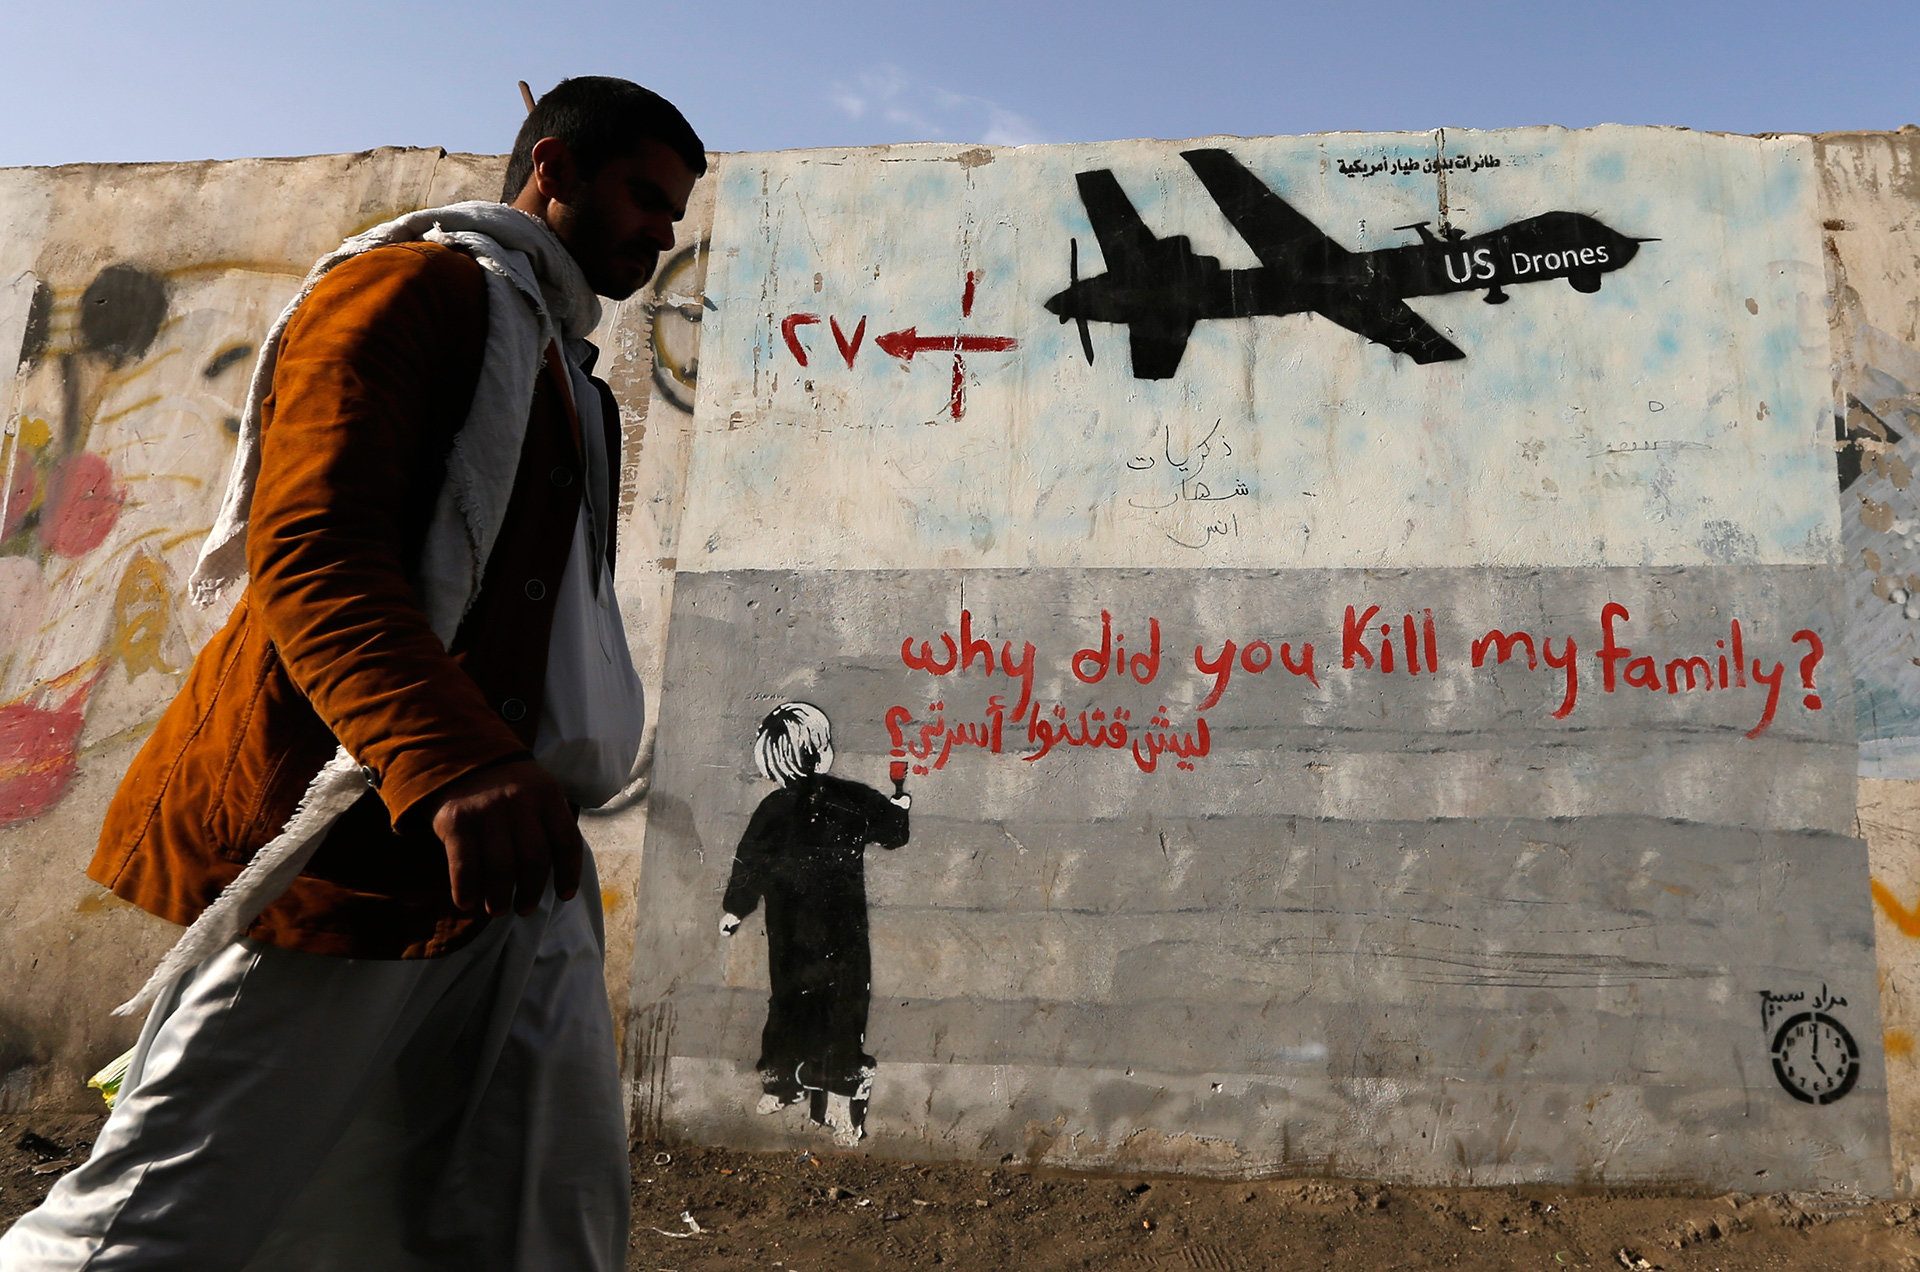 Drohengraffiti im Jemen  (Foto: Khaled Abdullah/REUTERS)